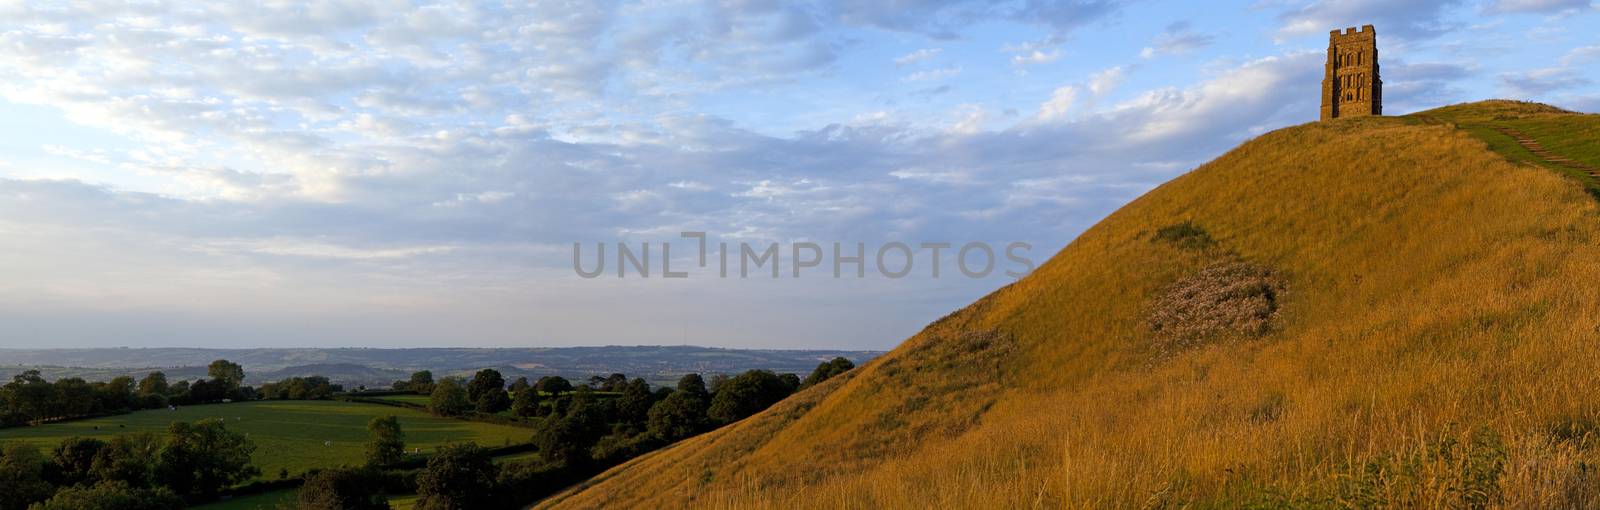 Panoramic shot of the Glastonbury Tor in Somerset, England.